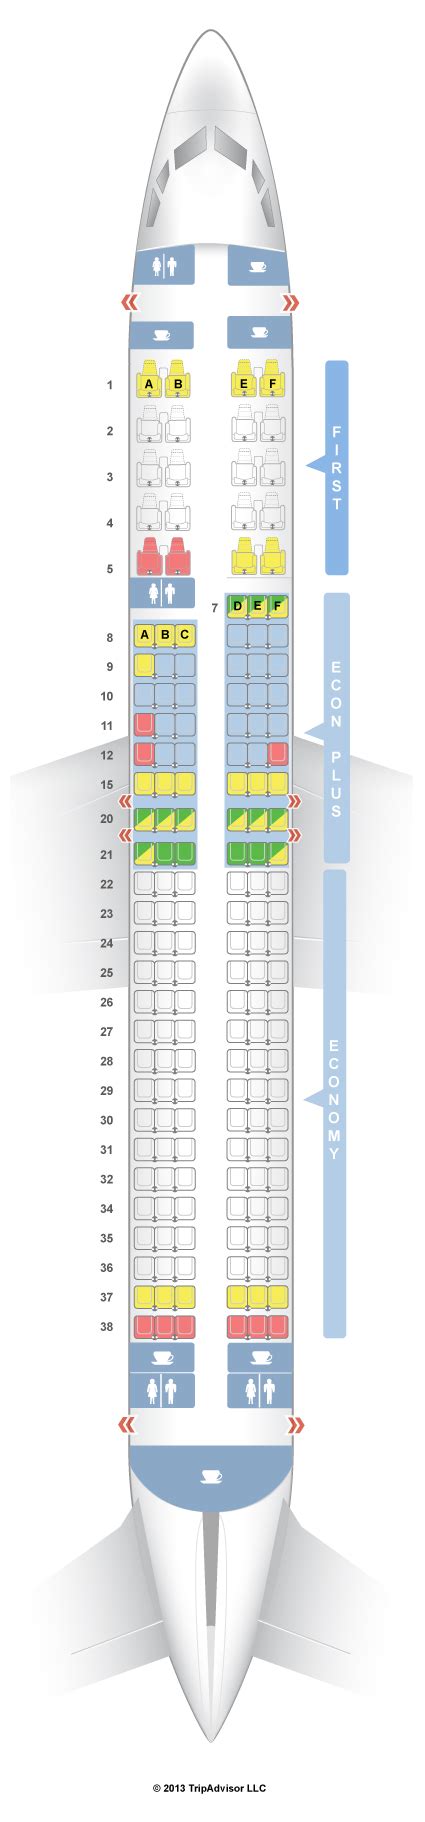 Seatguru Seat Map United Boeing V V Airline Seats